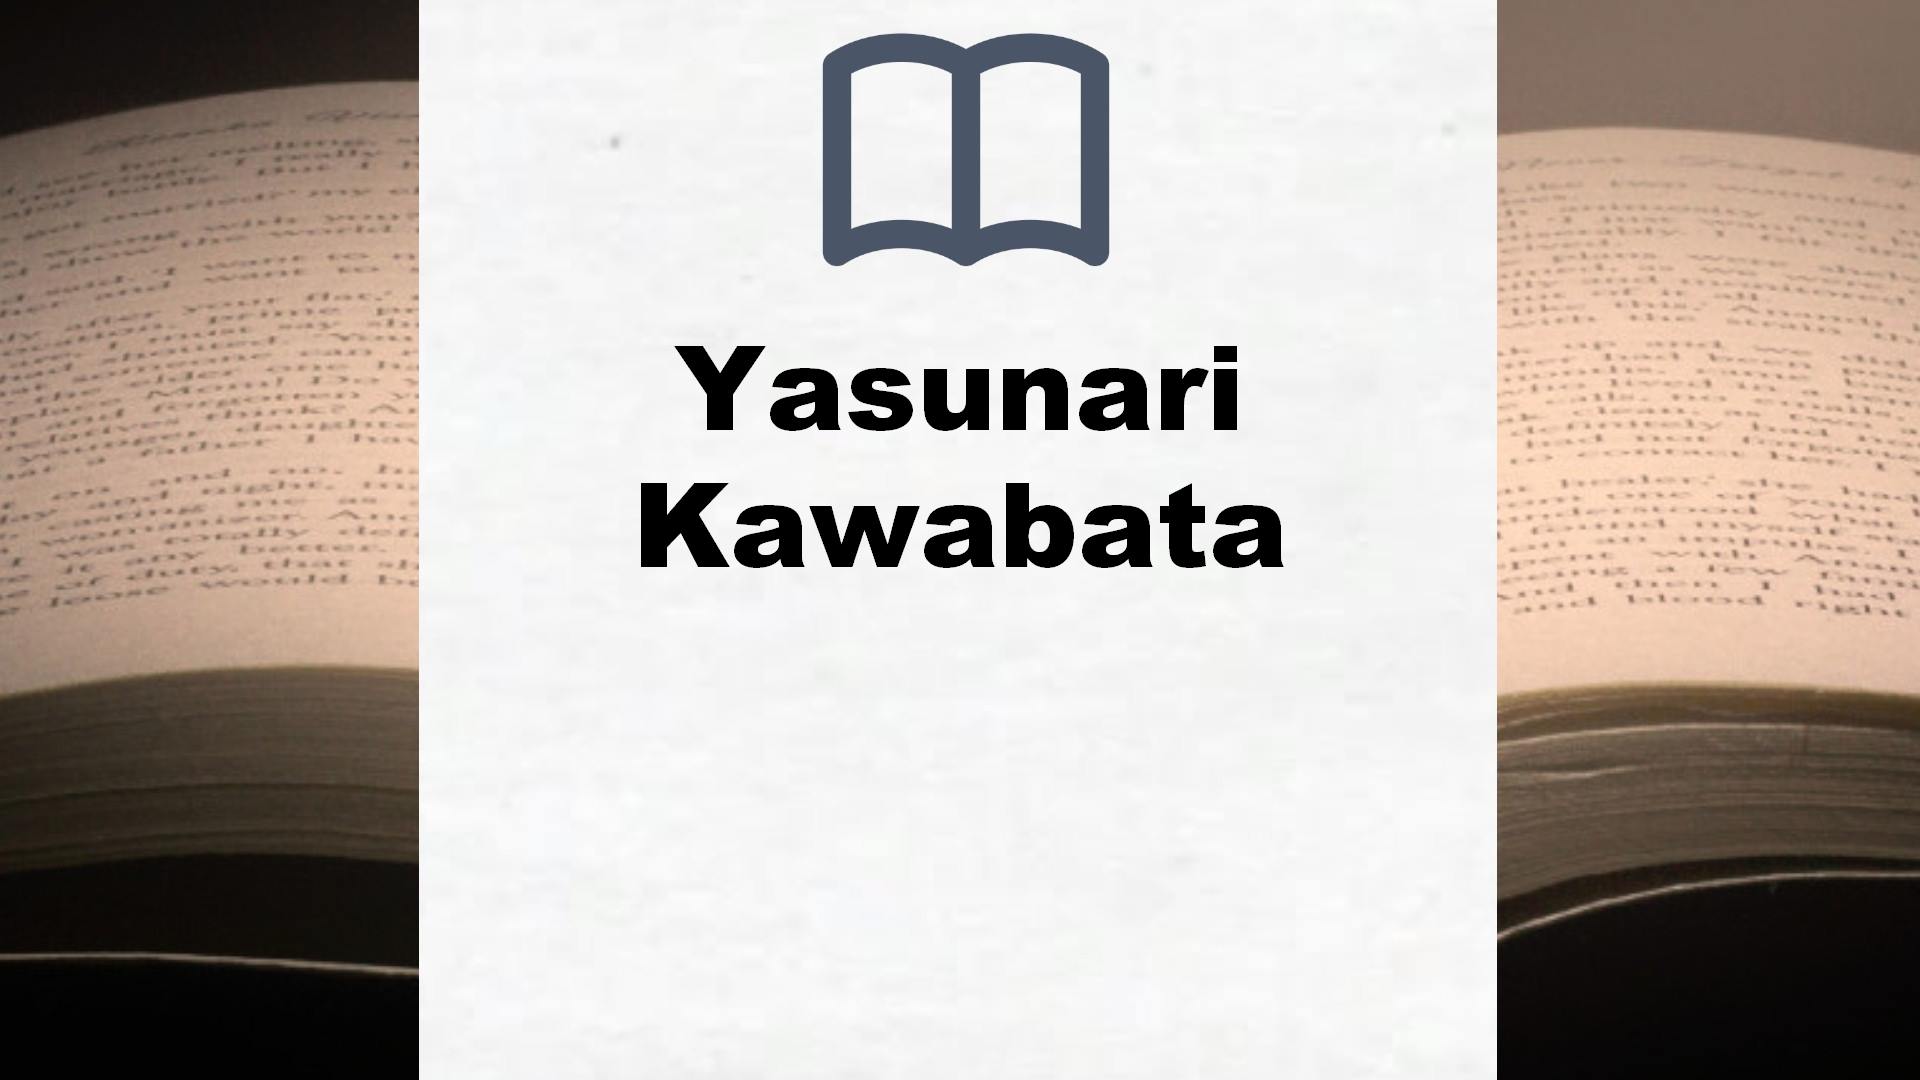 Libros Yasunari Kawabata